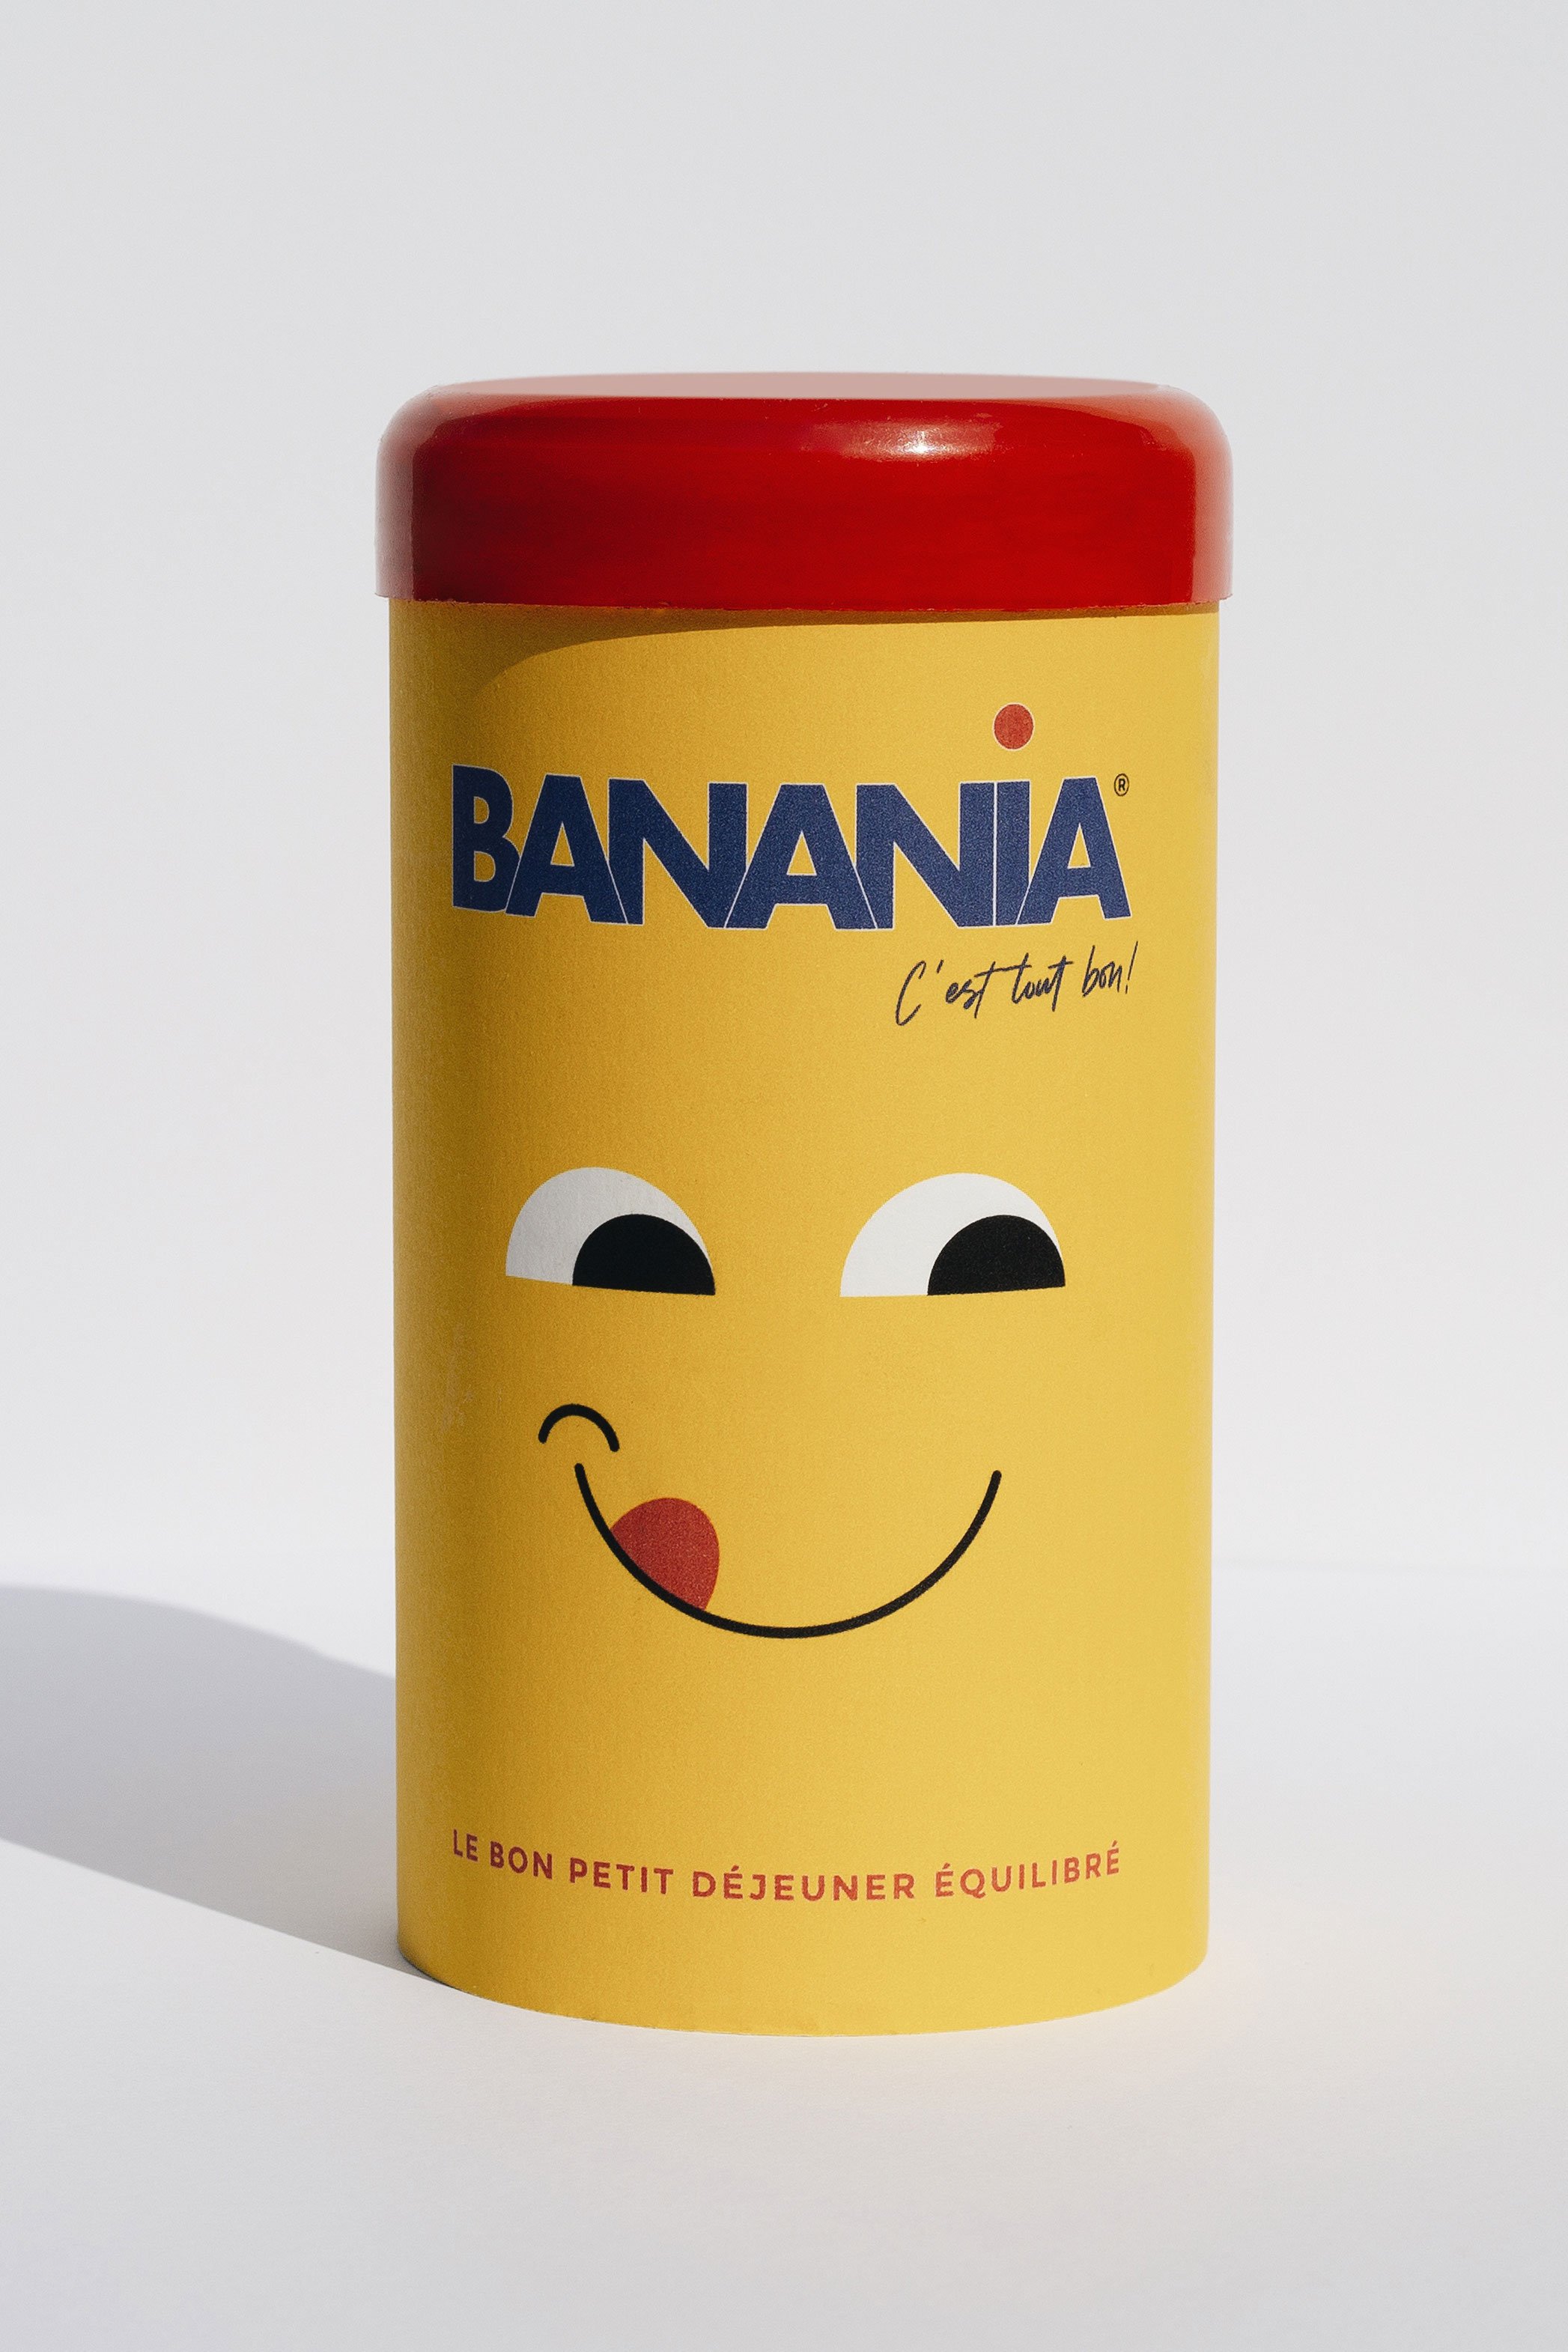 banania-rebranding-packaging-reveal-3.jpg